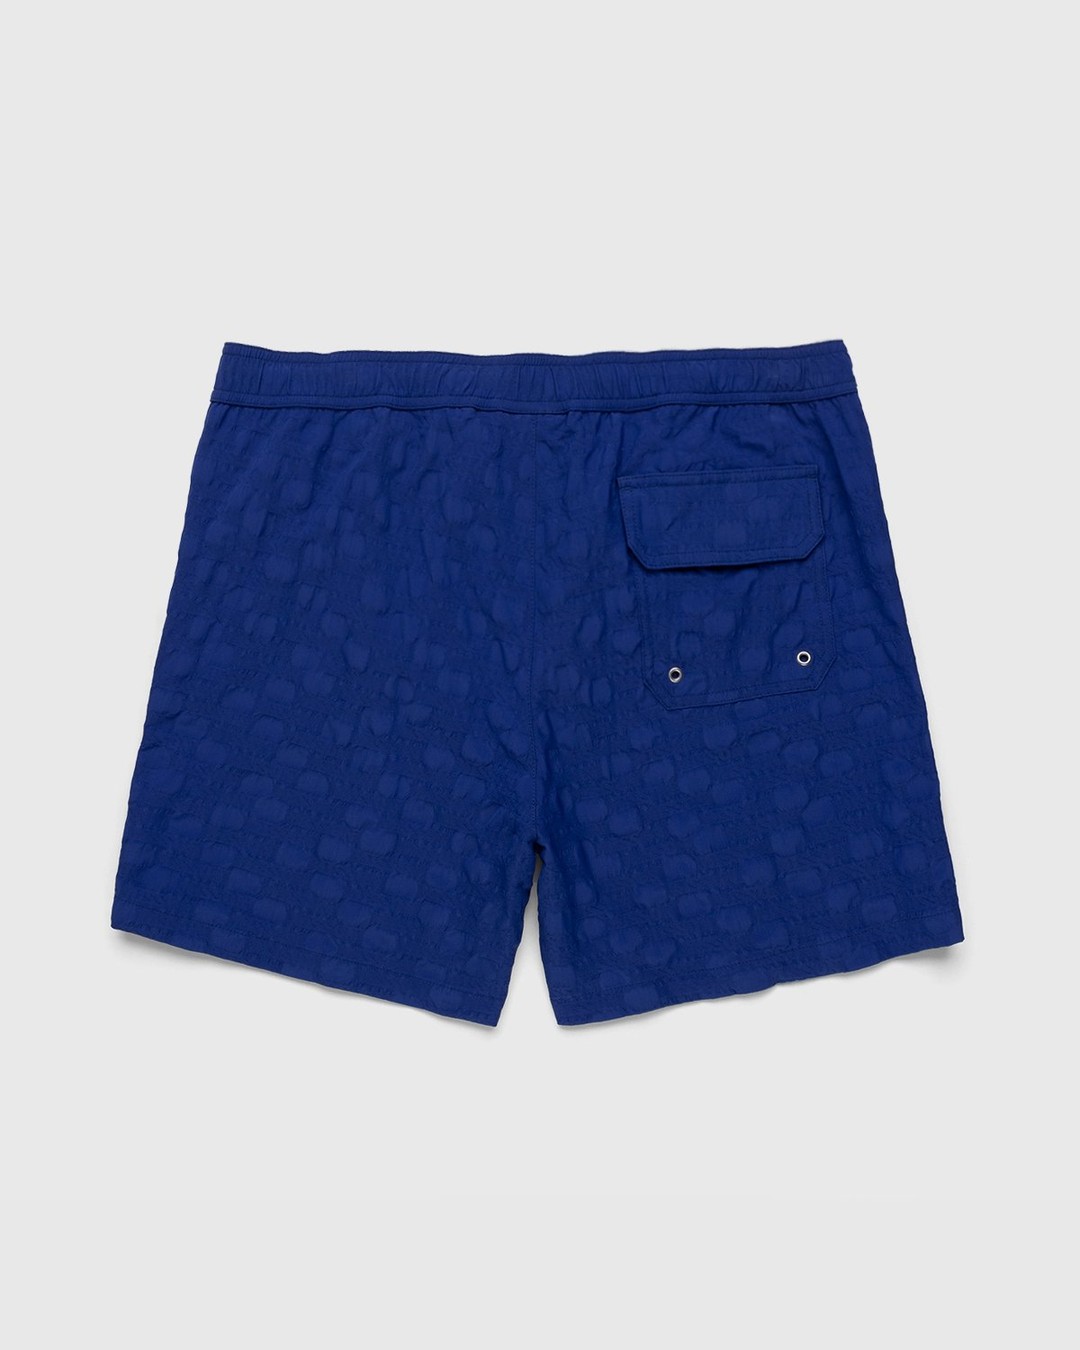 Missoni – Logo Swim Trunks Blue - Shorts - Blue - Image 2